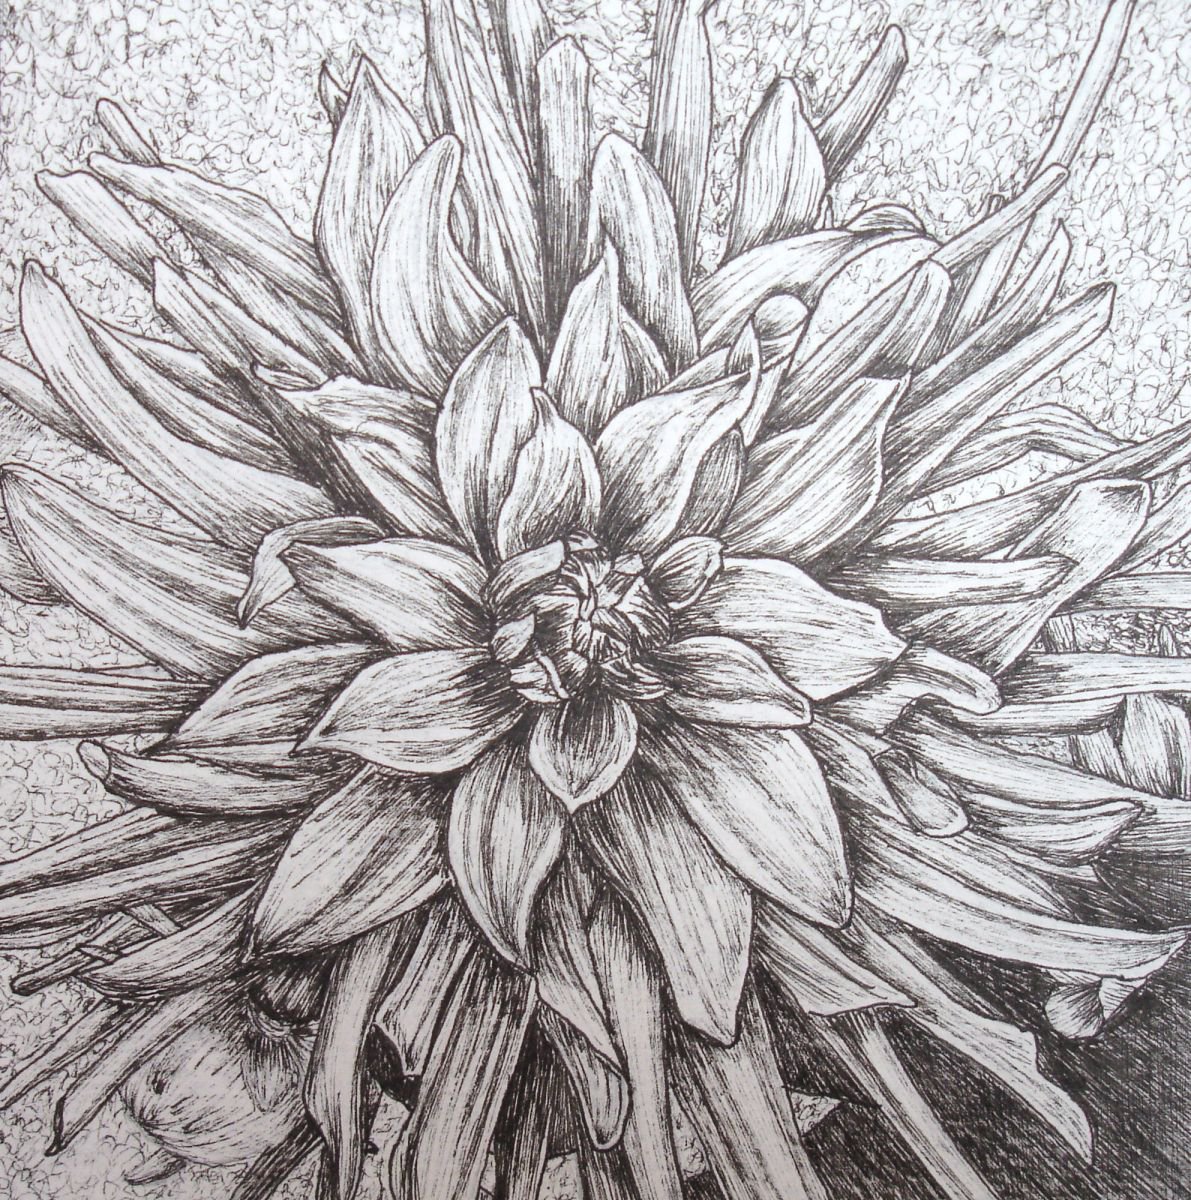 DAHLIA FLOWER 2 by Angela Stanbridge